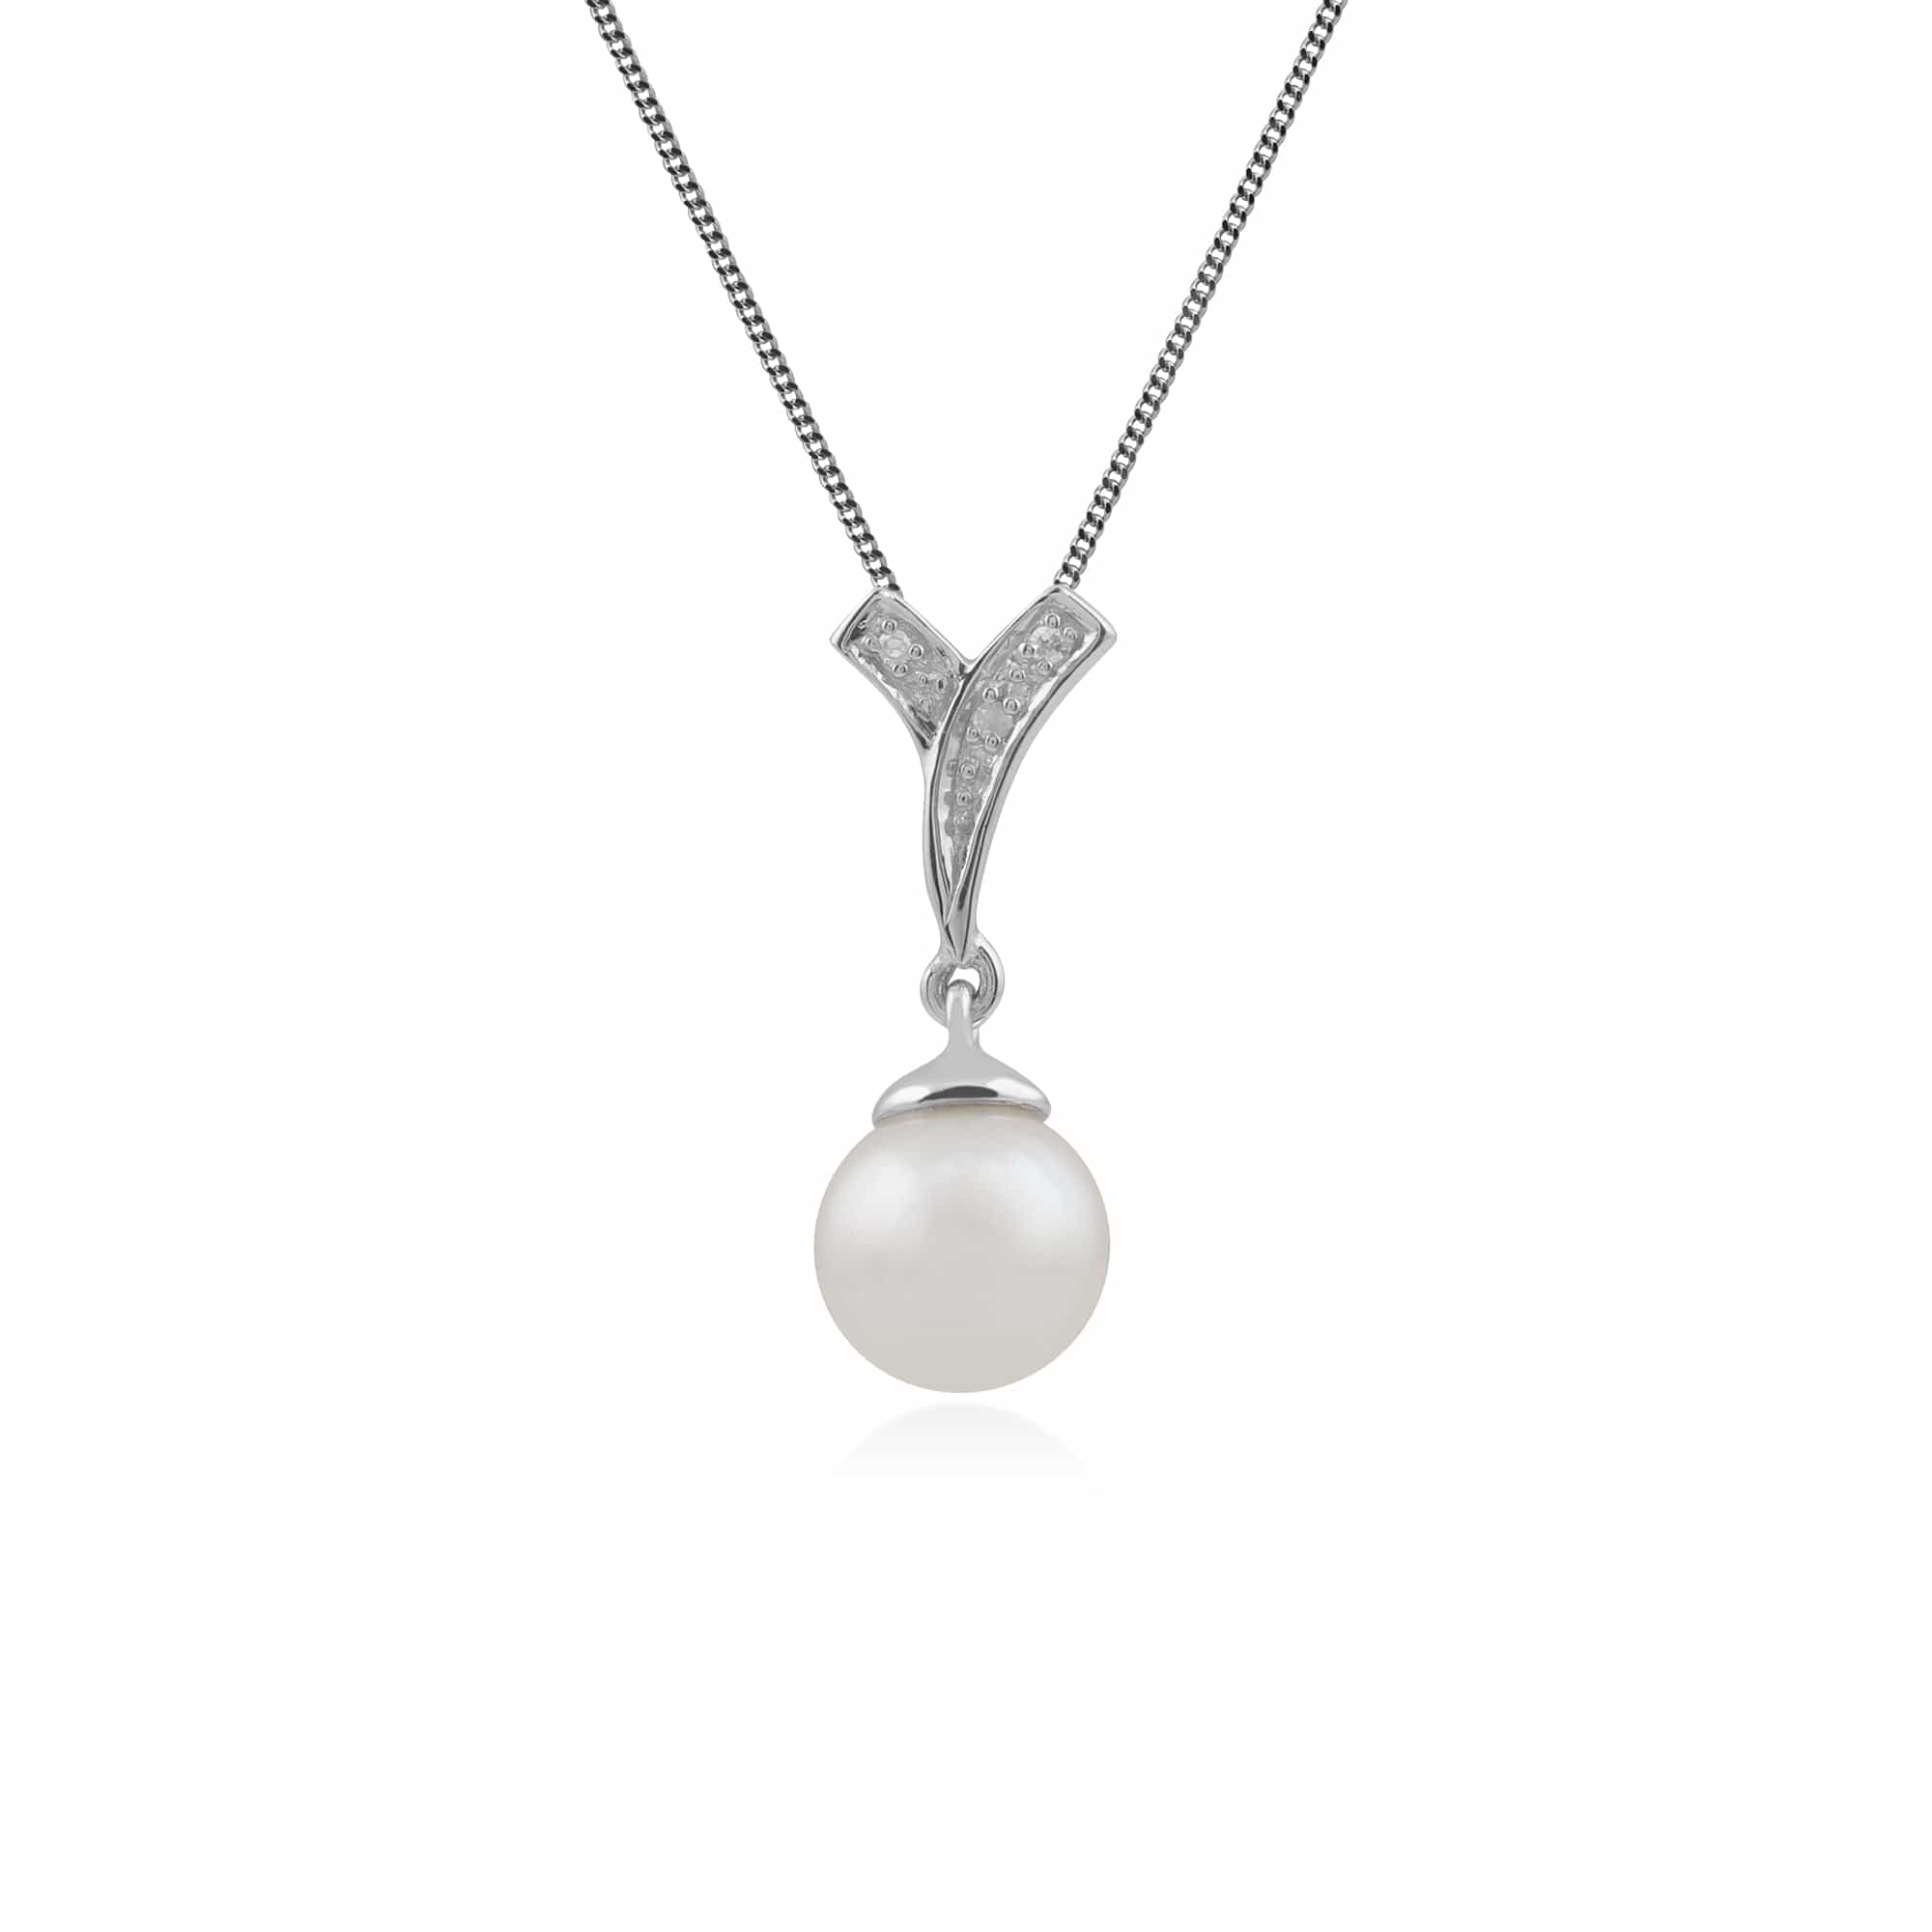 Gemondo 9ct White Gold 2.62ct Pearl & Diamond Pendant on 45cm Chain Image